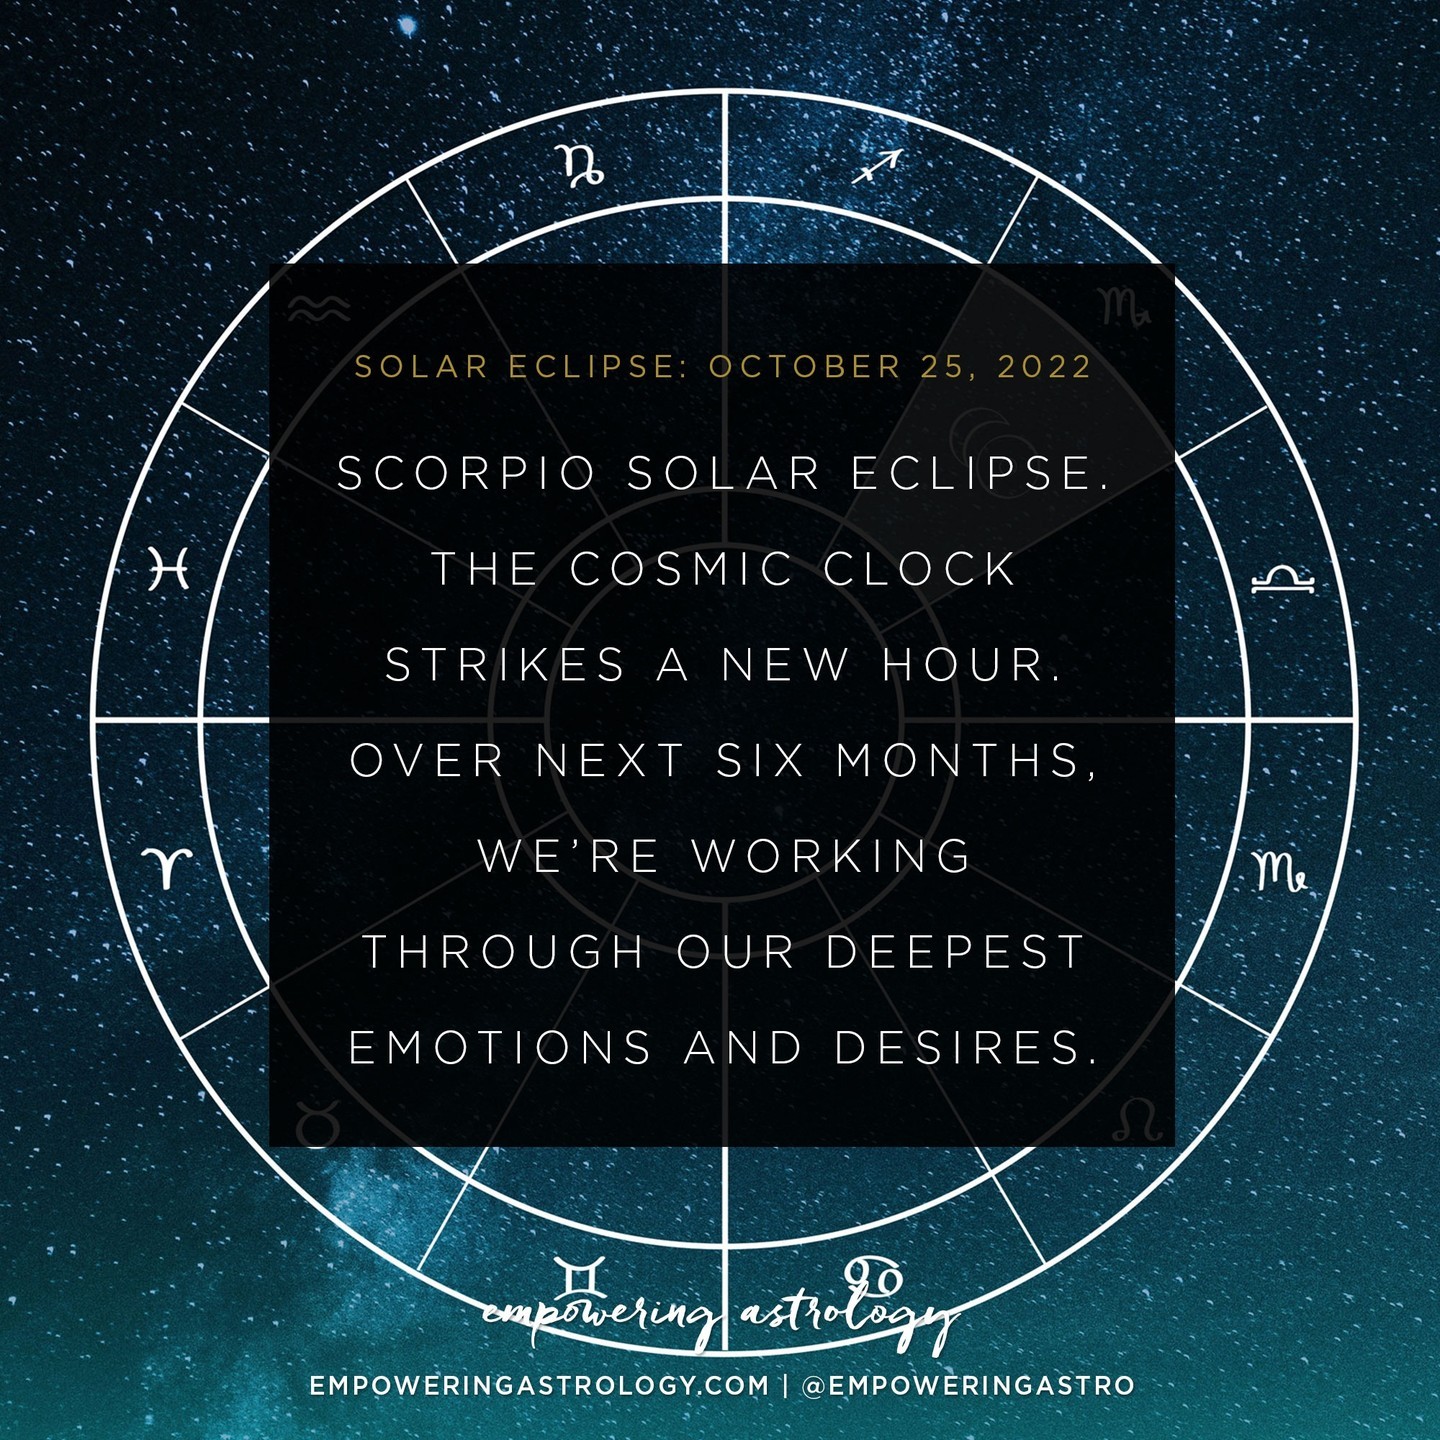 olar eclipse in corpio 2022 astrology